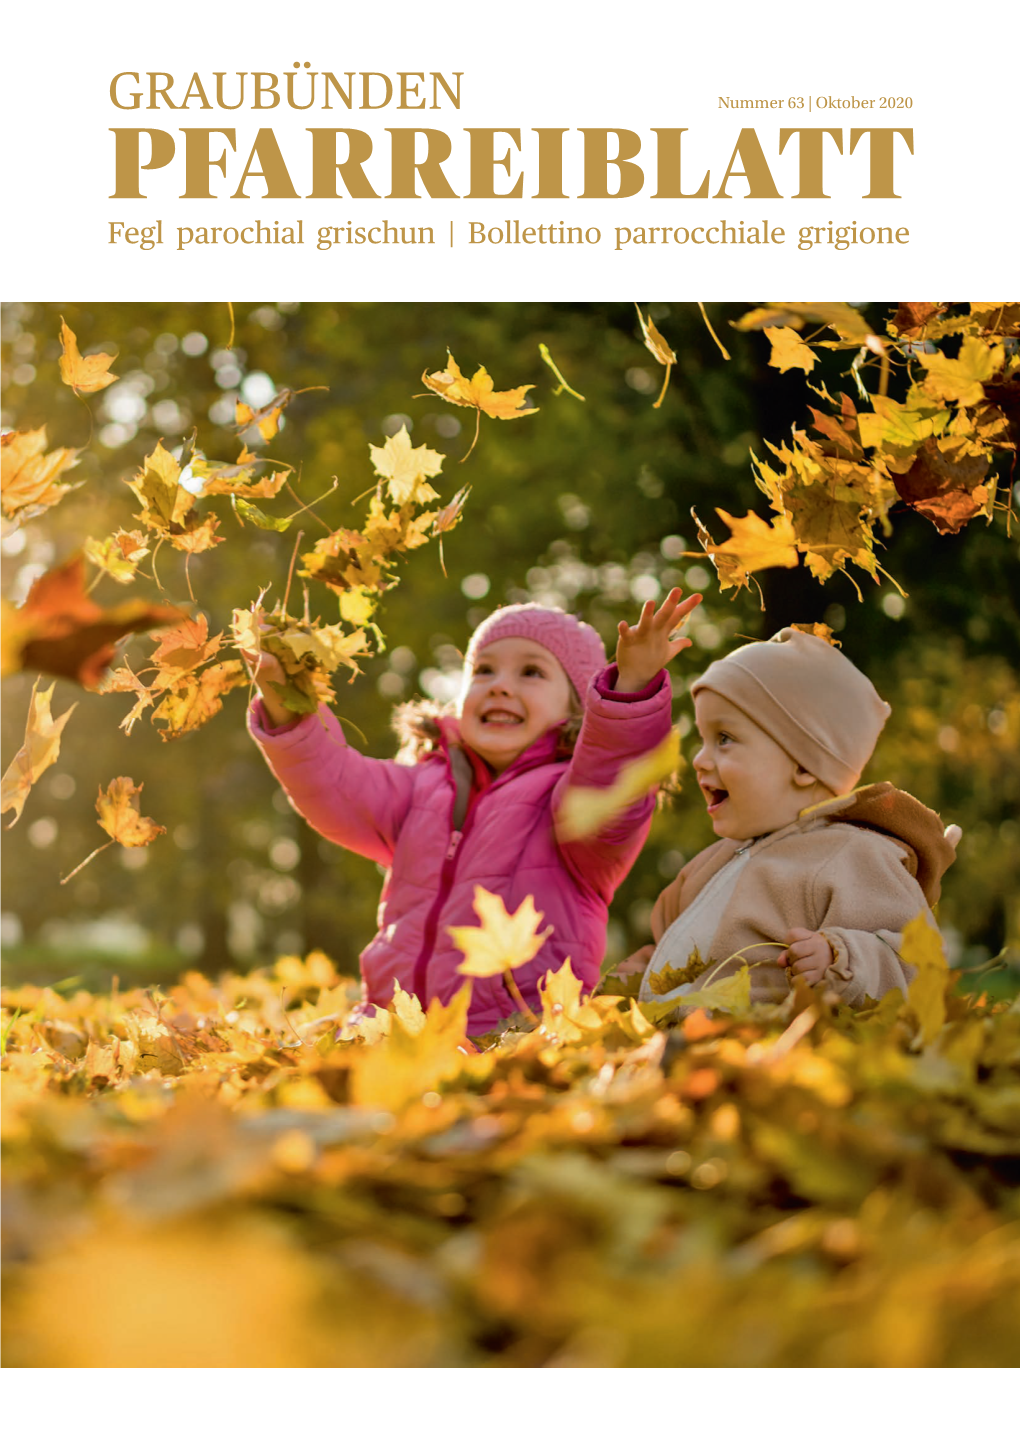 Graubünden Nummer 63 | Oktober 2020 Pfarreiblatt Fegl Parochial Grischun | Bollettino Parrocchiale Grigione 2 Pfarreiblatt Graubünden | Oktober 2020